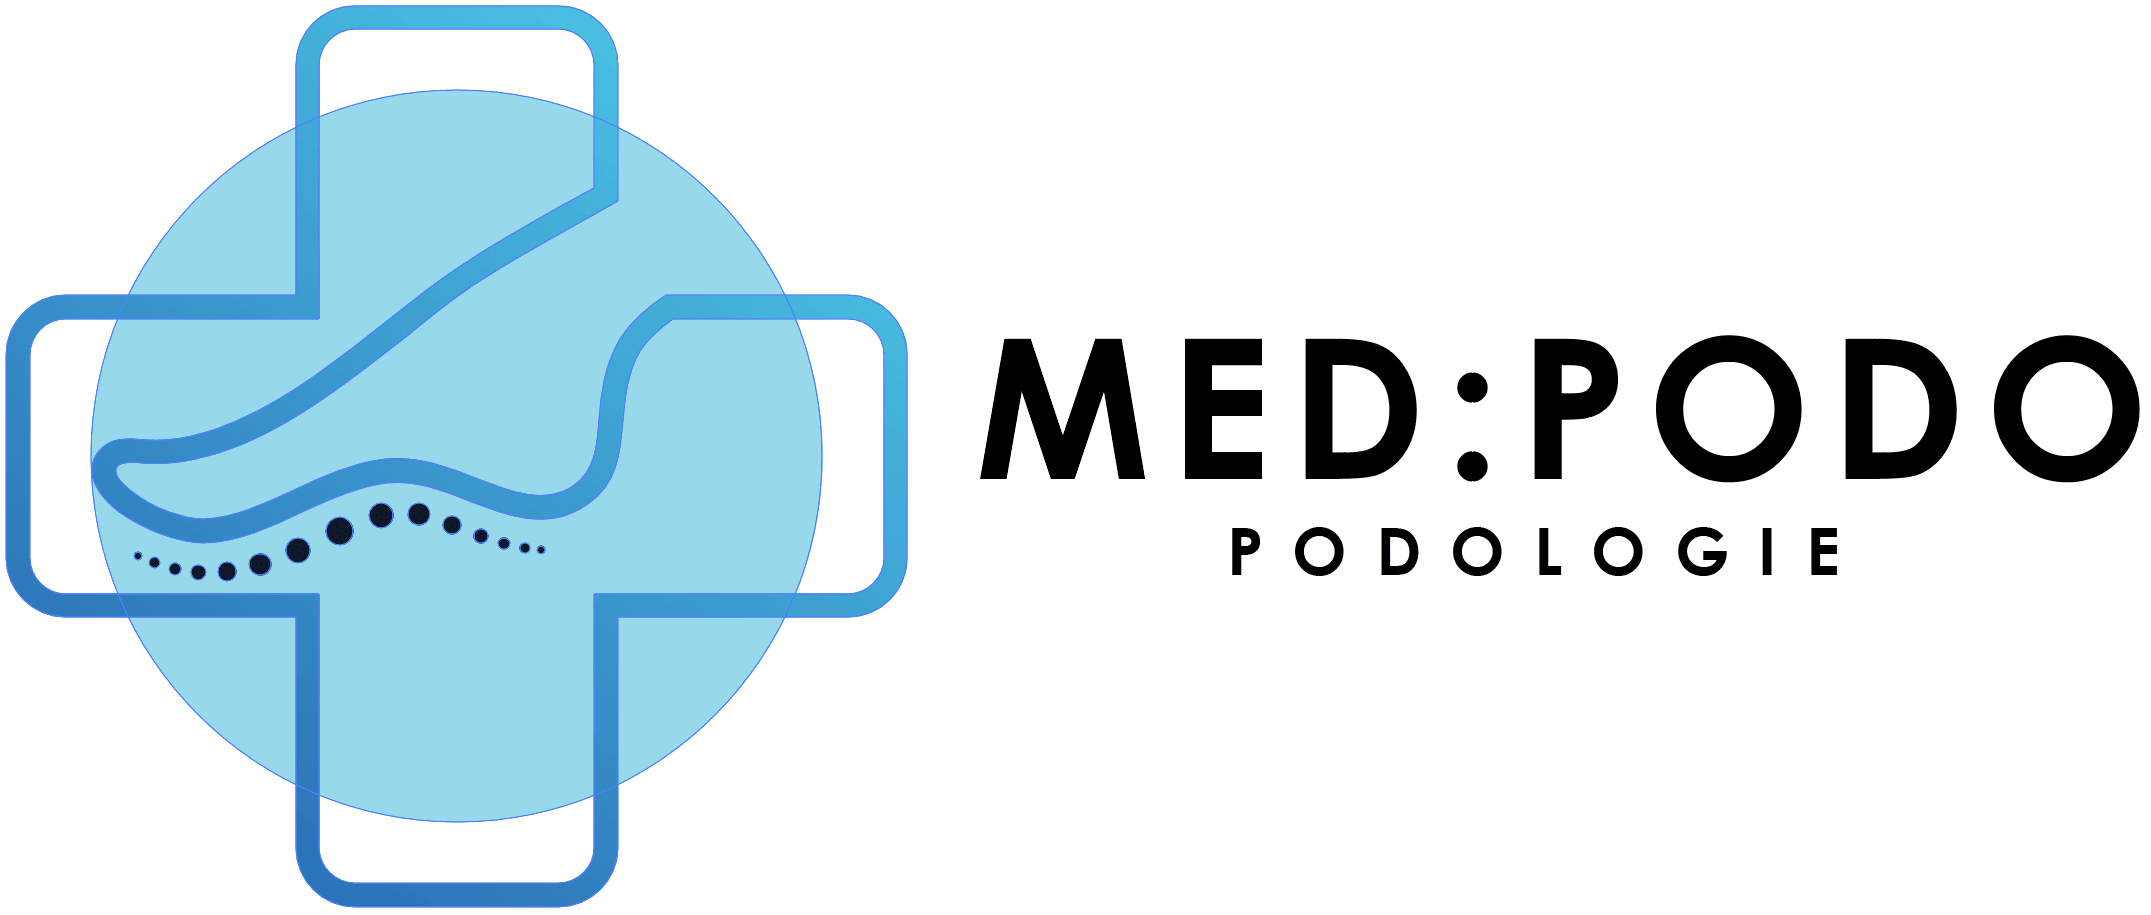 MED:PODO - Mobile Podologie in Grünstadt und Umgebung